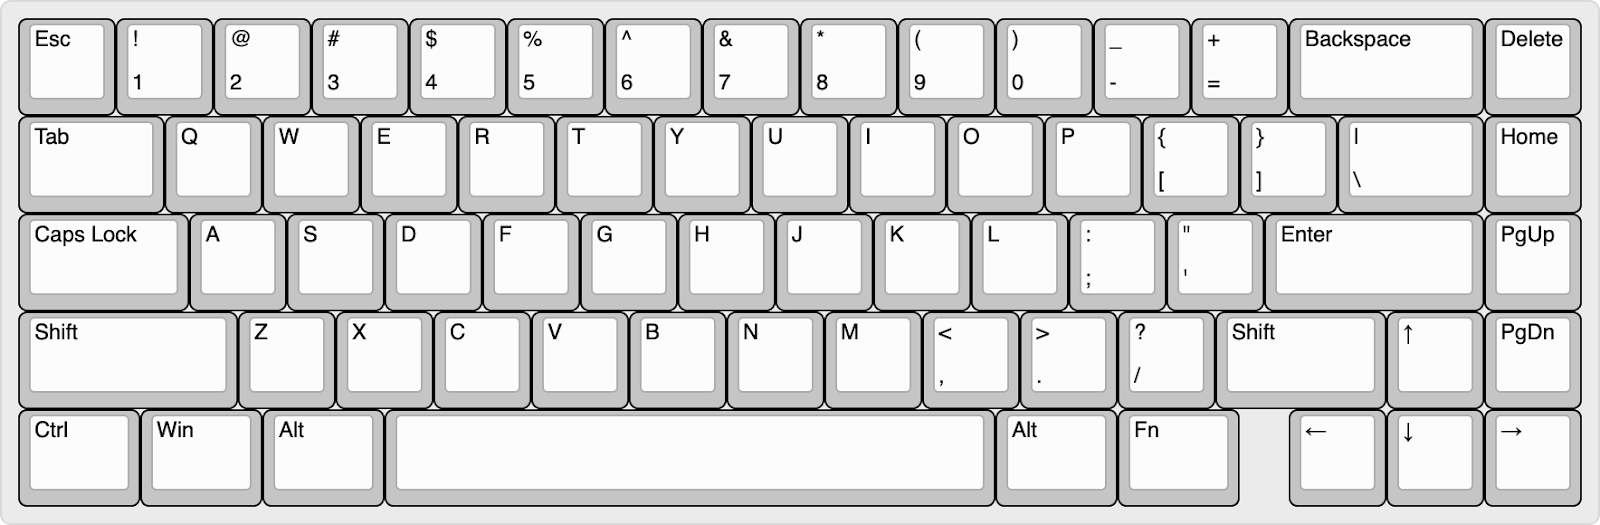 image of a keyboard